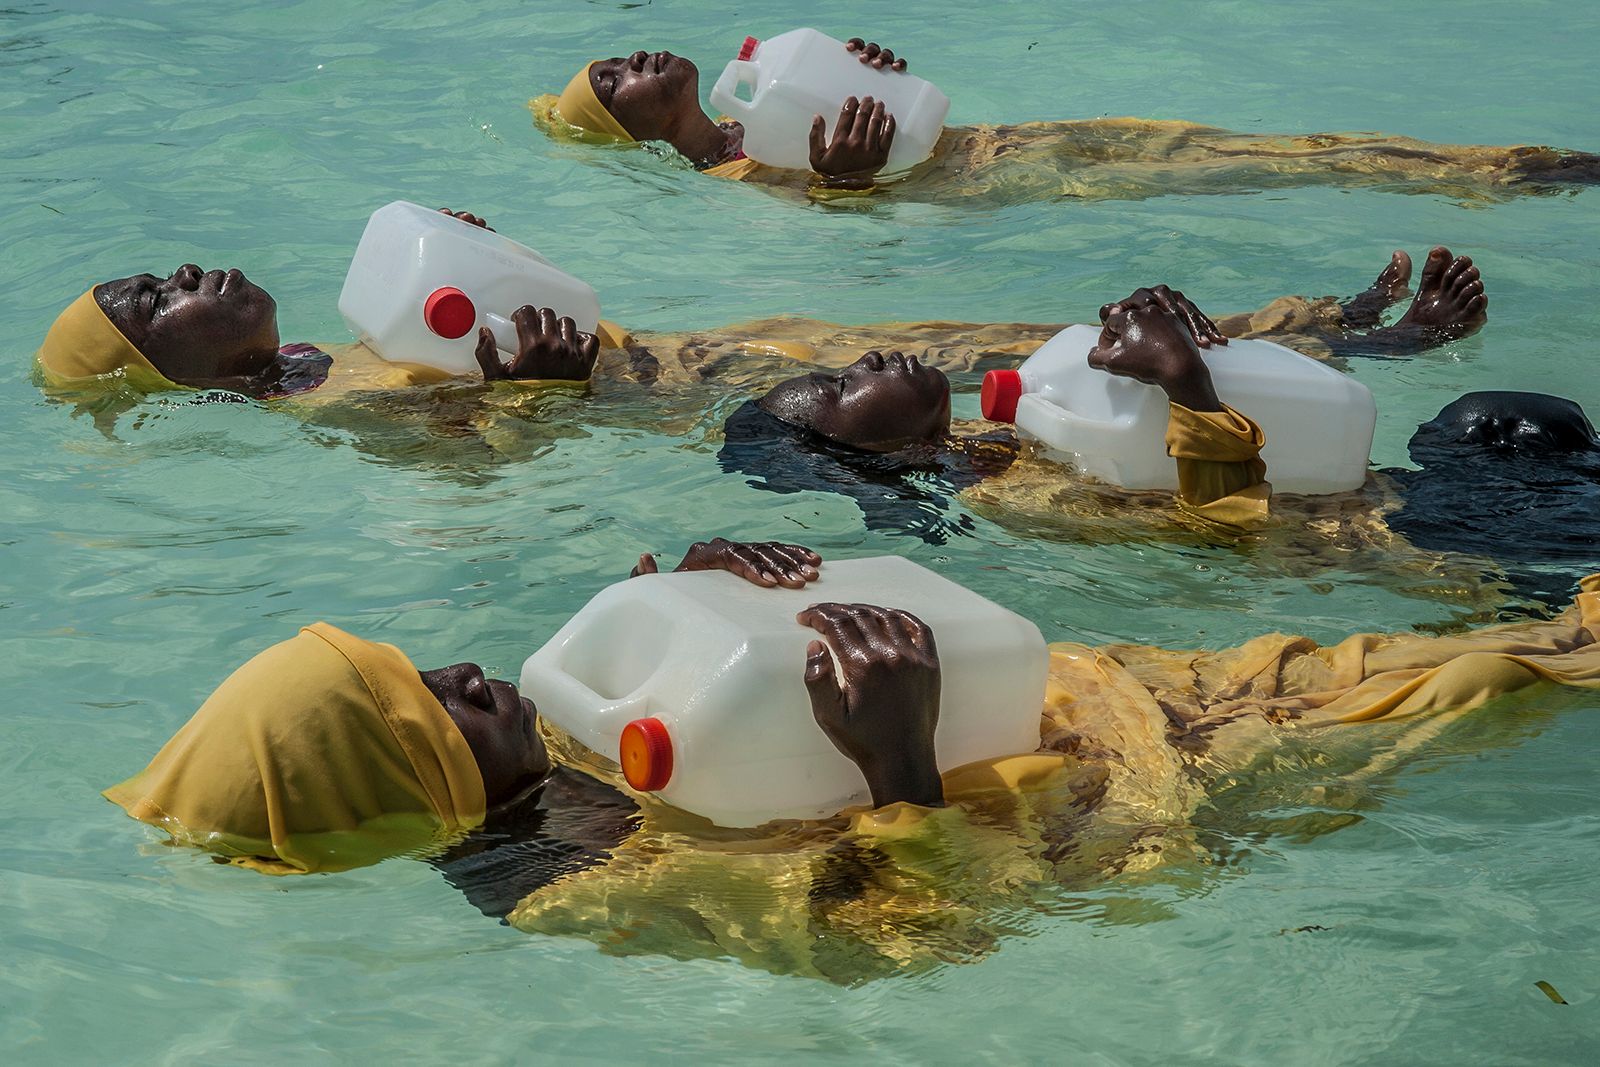 © Anna Boyiazis - Kijini Primary School students learn to float, swim and perform rescues in the Indian Ocean off of Muyuni, Zanzibar.